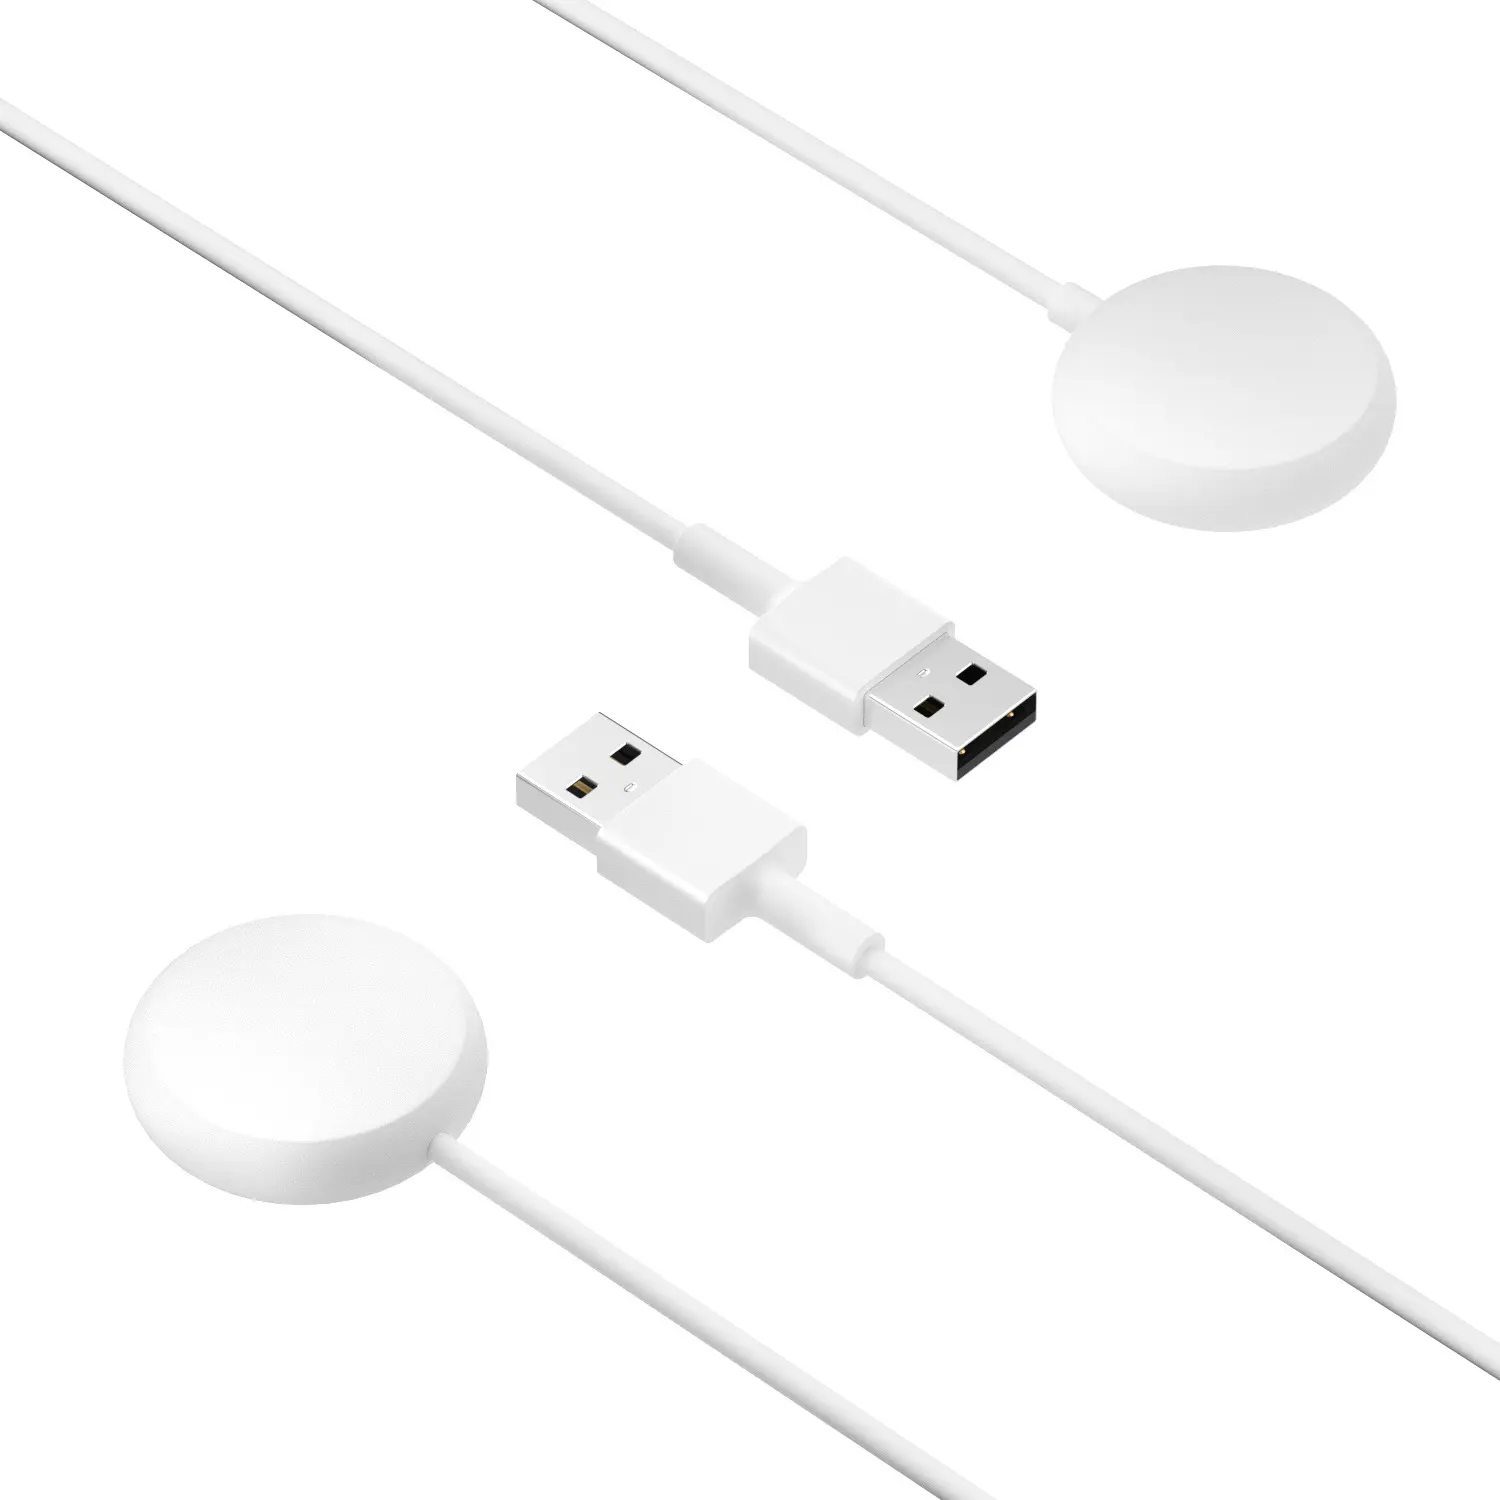 Cable de carga USB compatible con la base del cargador inalámbrico de reemplazo del reloj Google Pixel